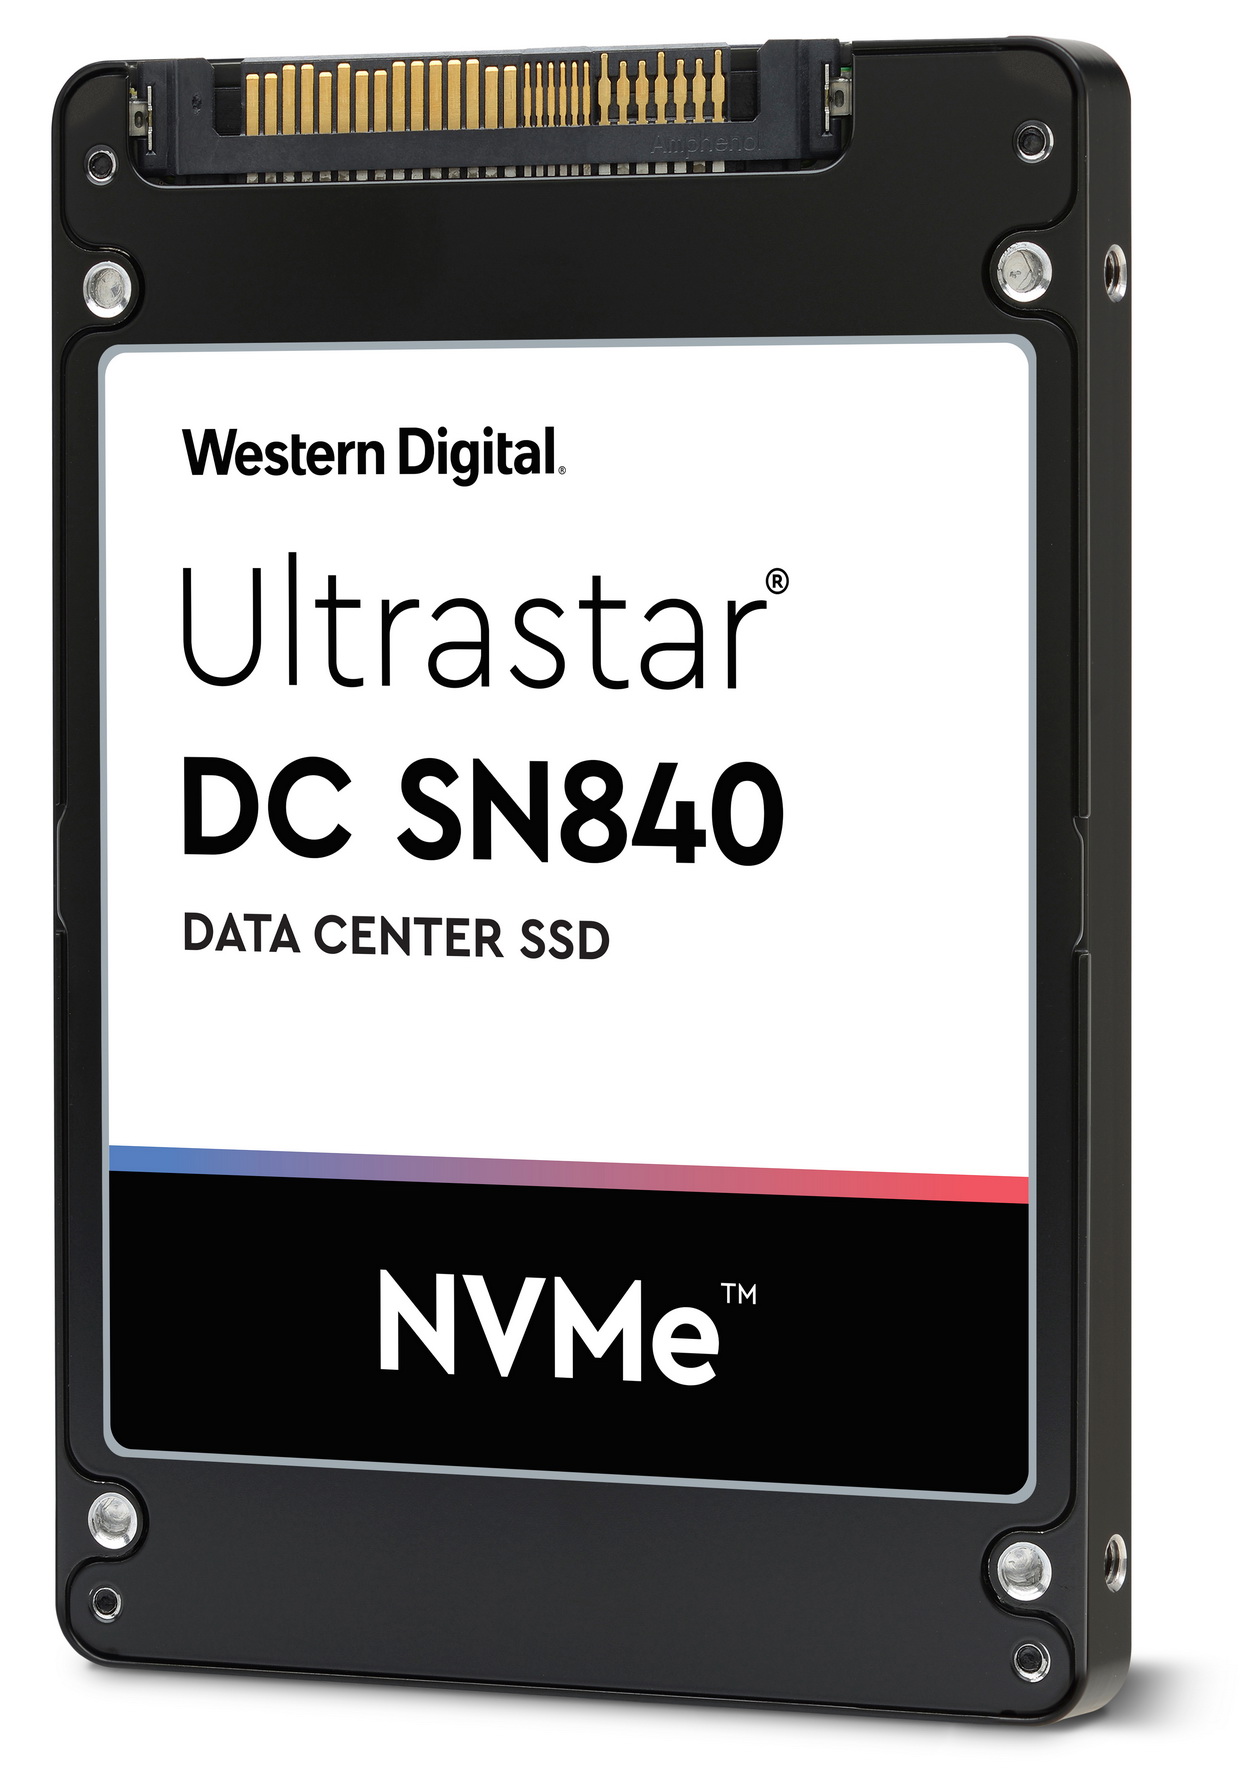 Ultrastar-DC-SN840-NVMe-standingRight-connector-HR-wt-bknd.jpg